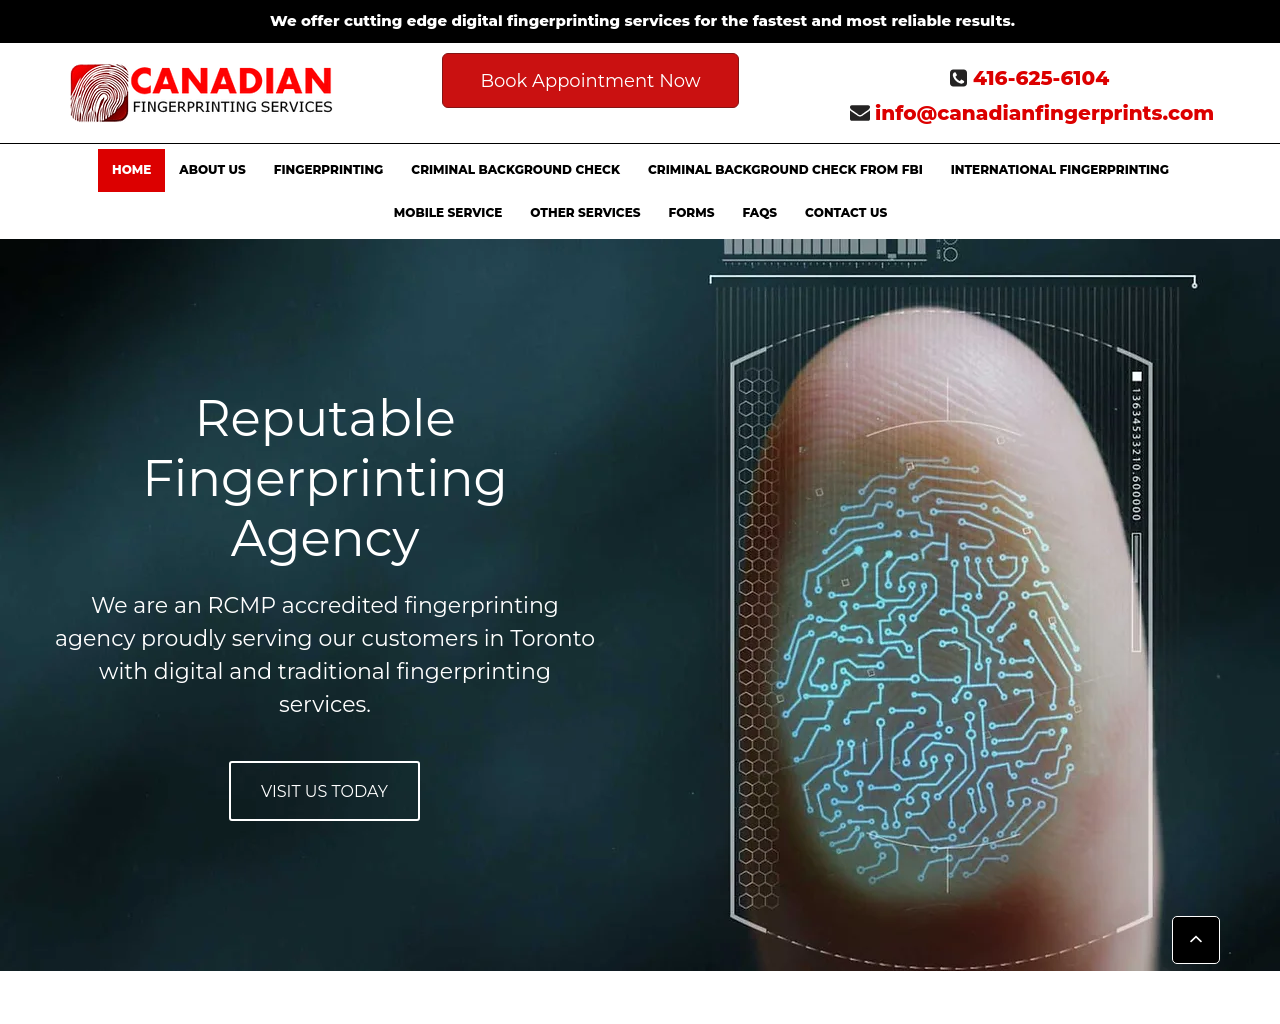 canadianfingerprints.com